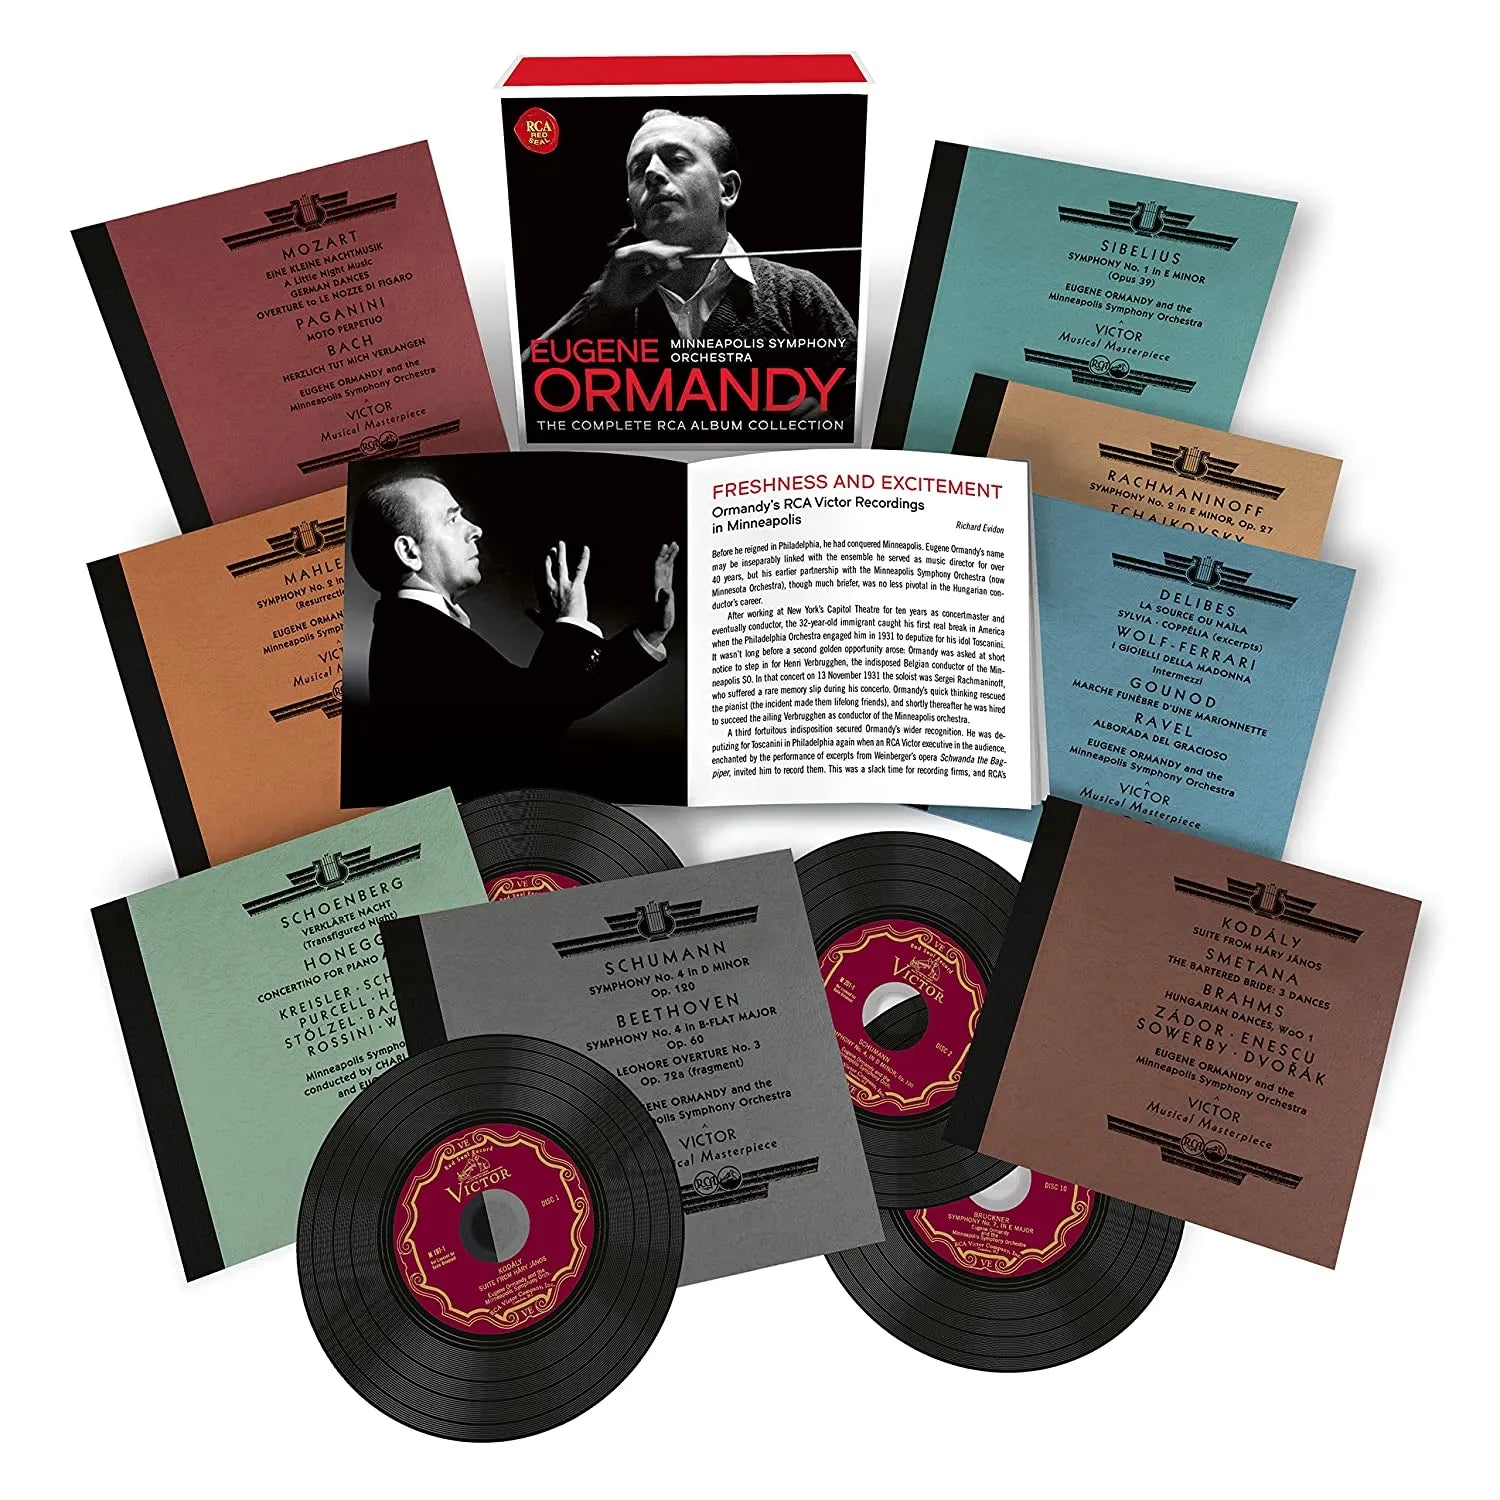 Eugene Ormandy: The Complete RCA Album Collection / Minneapolis Symphony